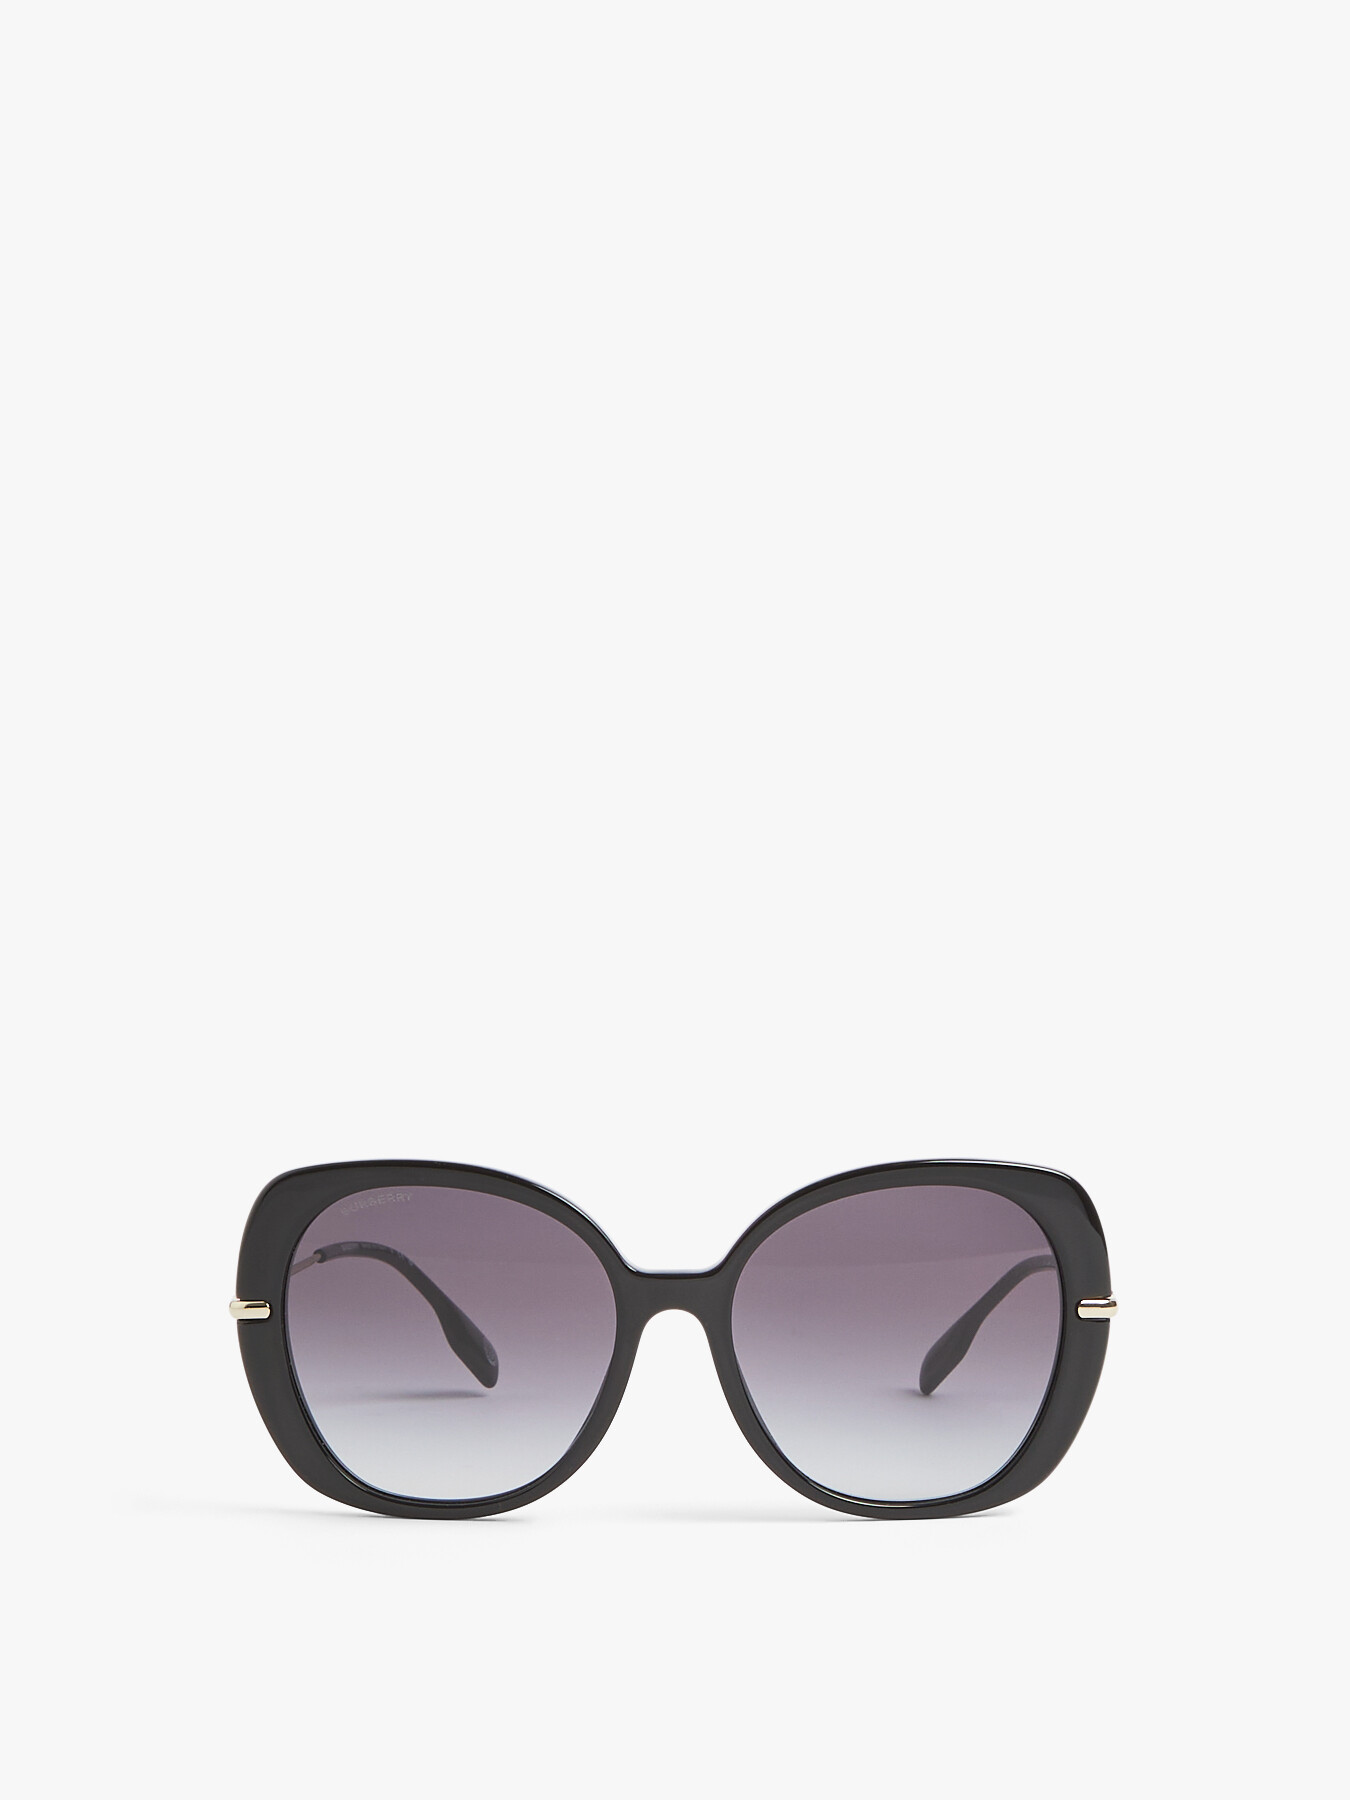 Burberry Women's Eugenie Acetate Sunglasses Black